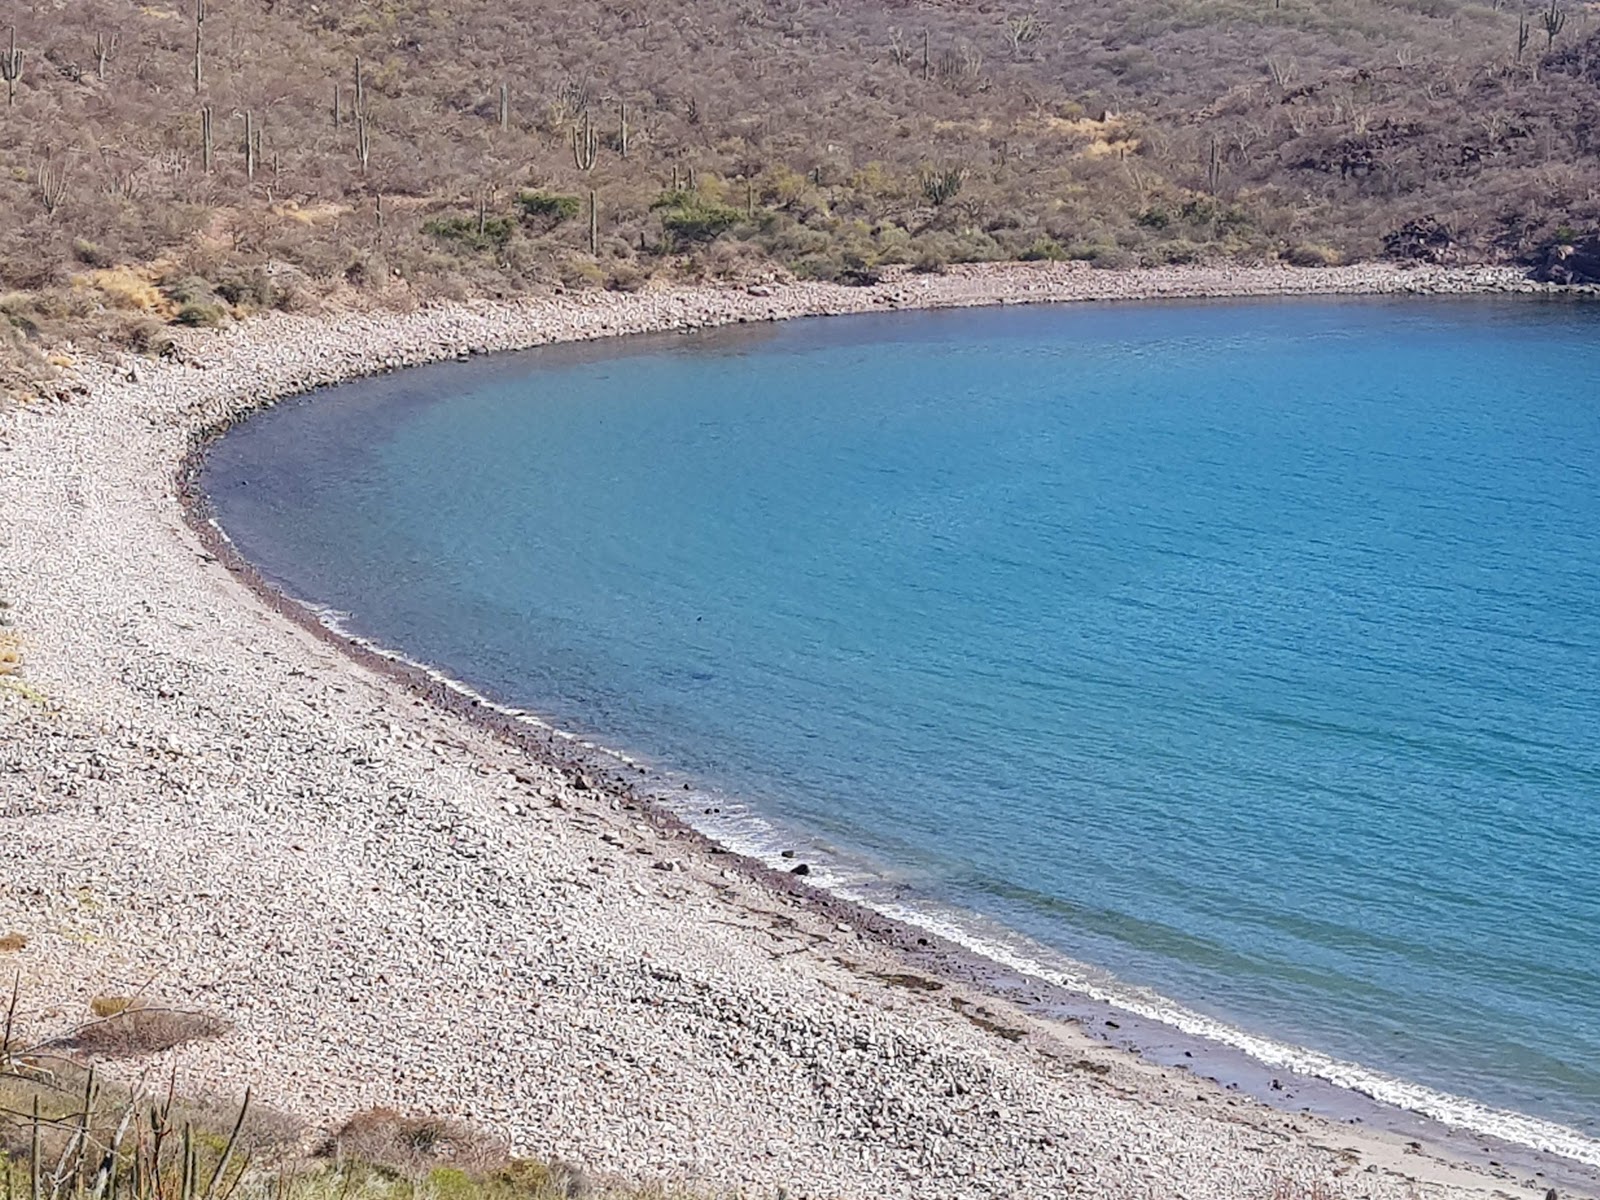 Foto di El carricito beach con una superficie del ciottolo grigio